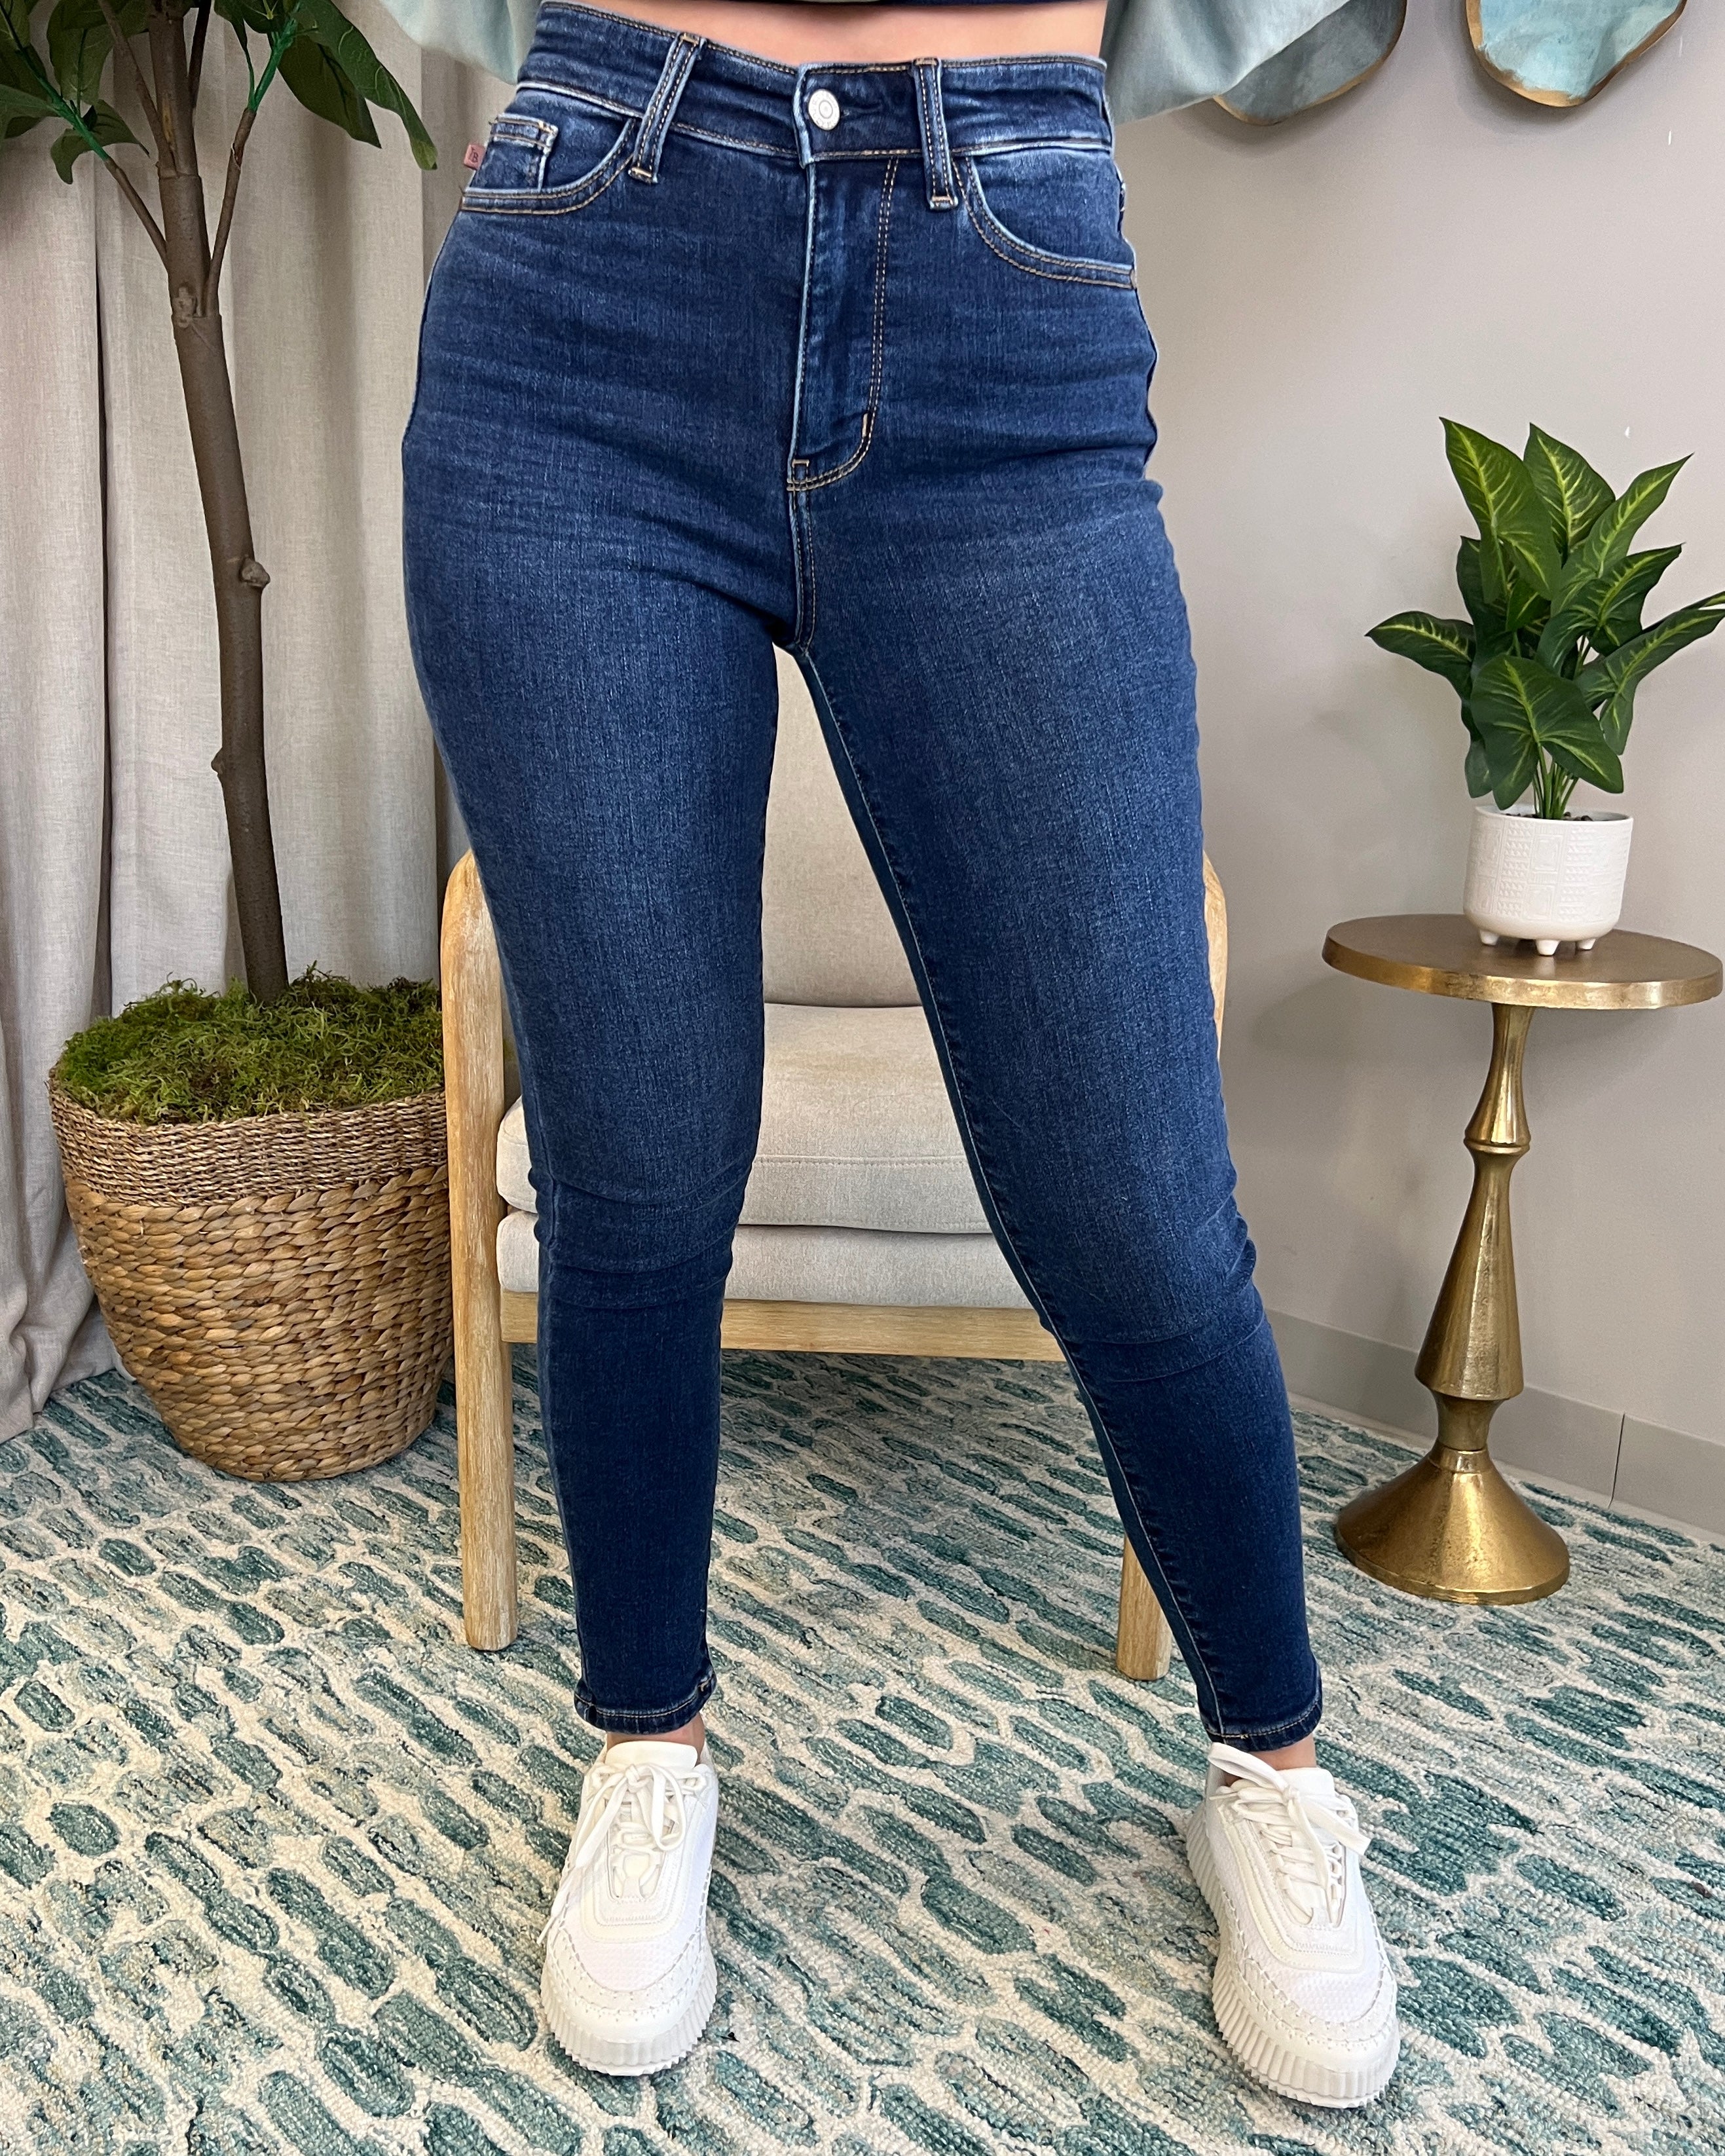 Women's Straight Leg Jeans for sale in Jeddo, Alabama